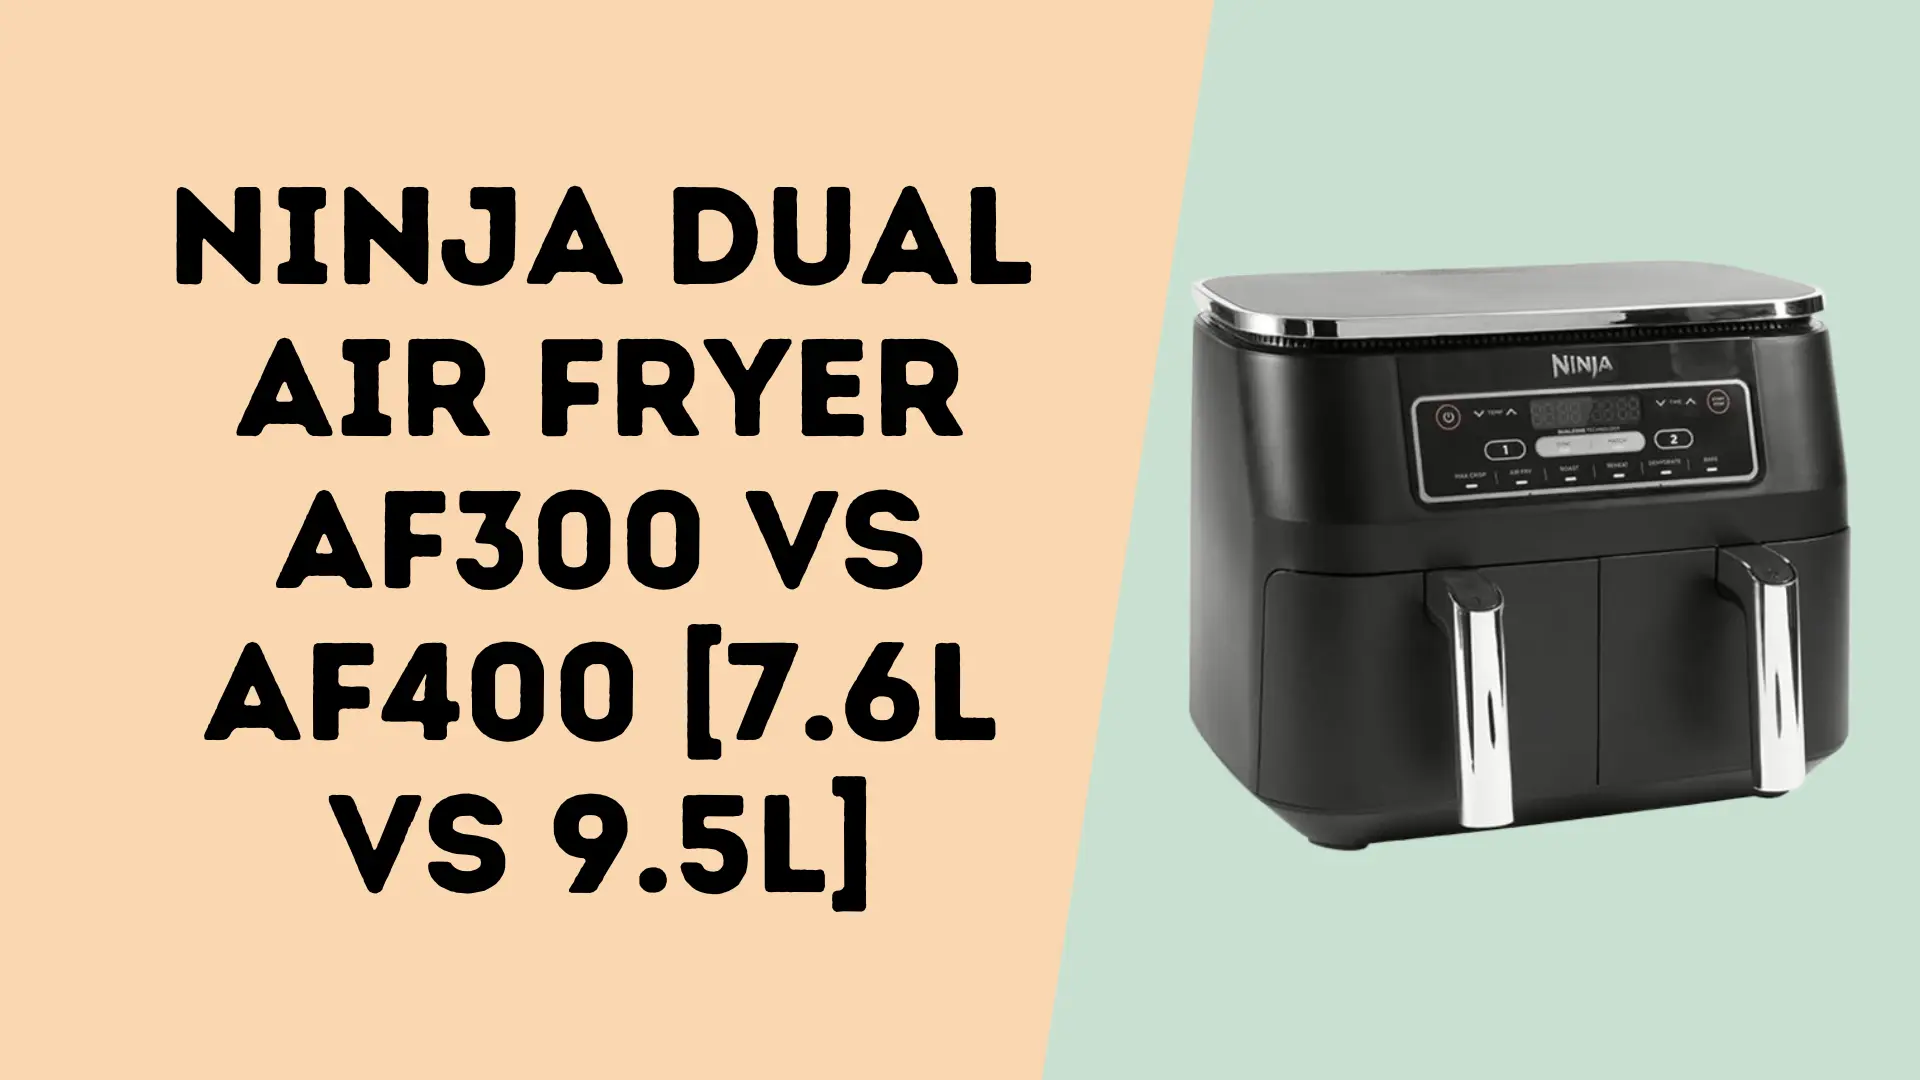 Ninja Dual Air Fryer AF300 Vs AF400 [7.6L Vs 9.5L]